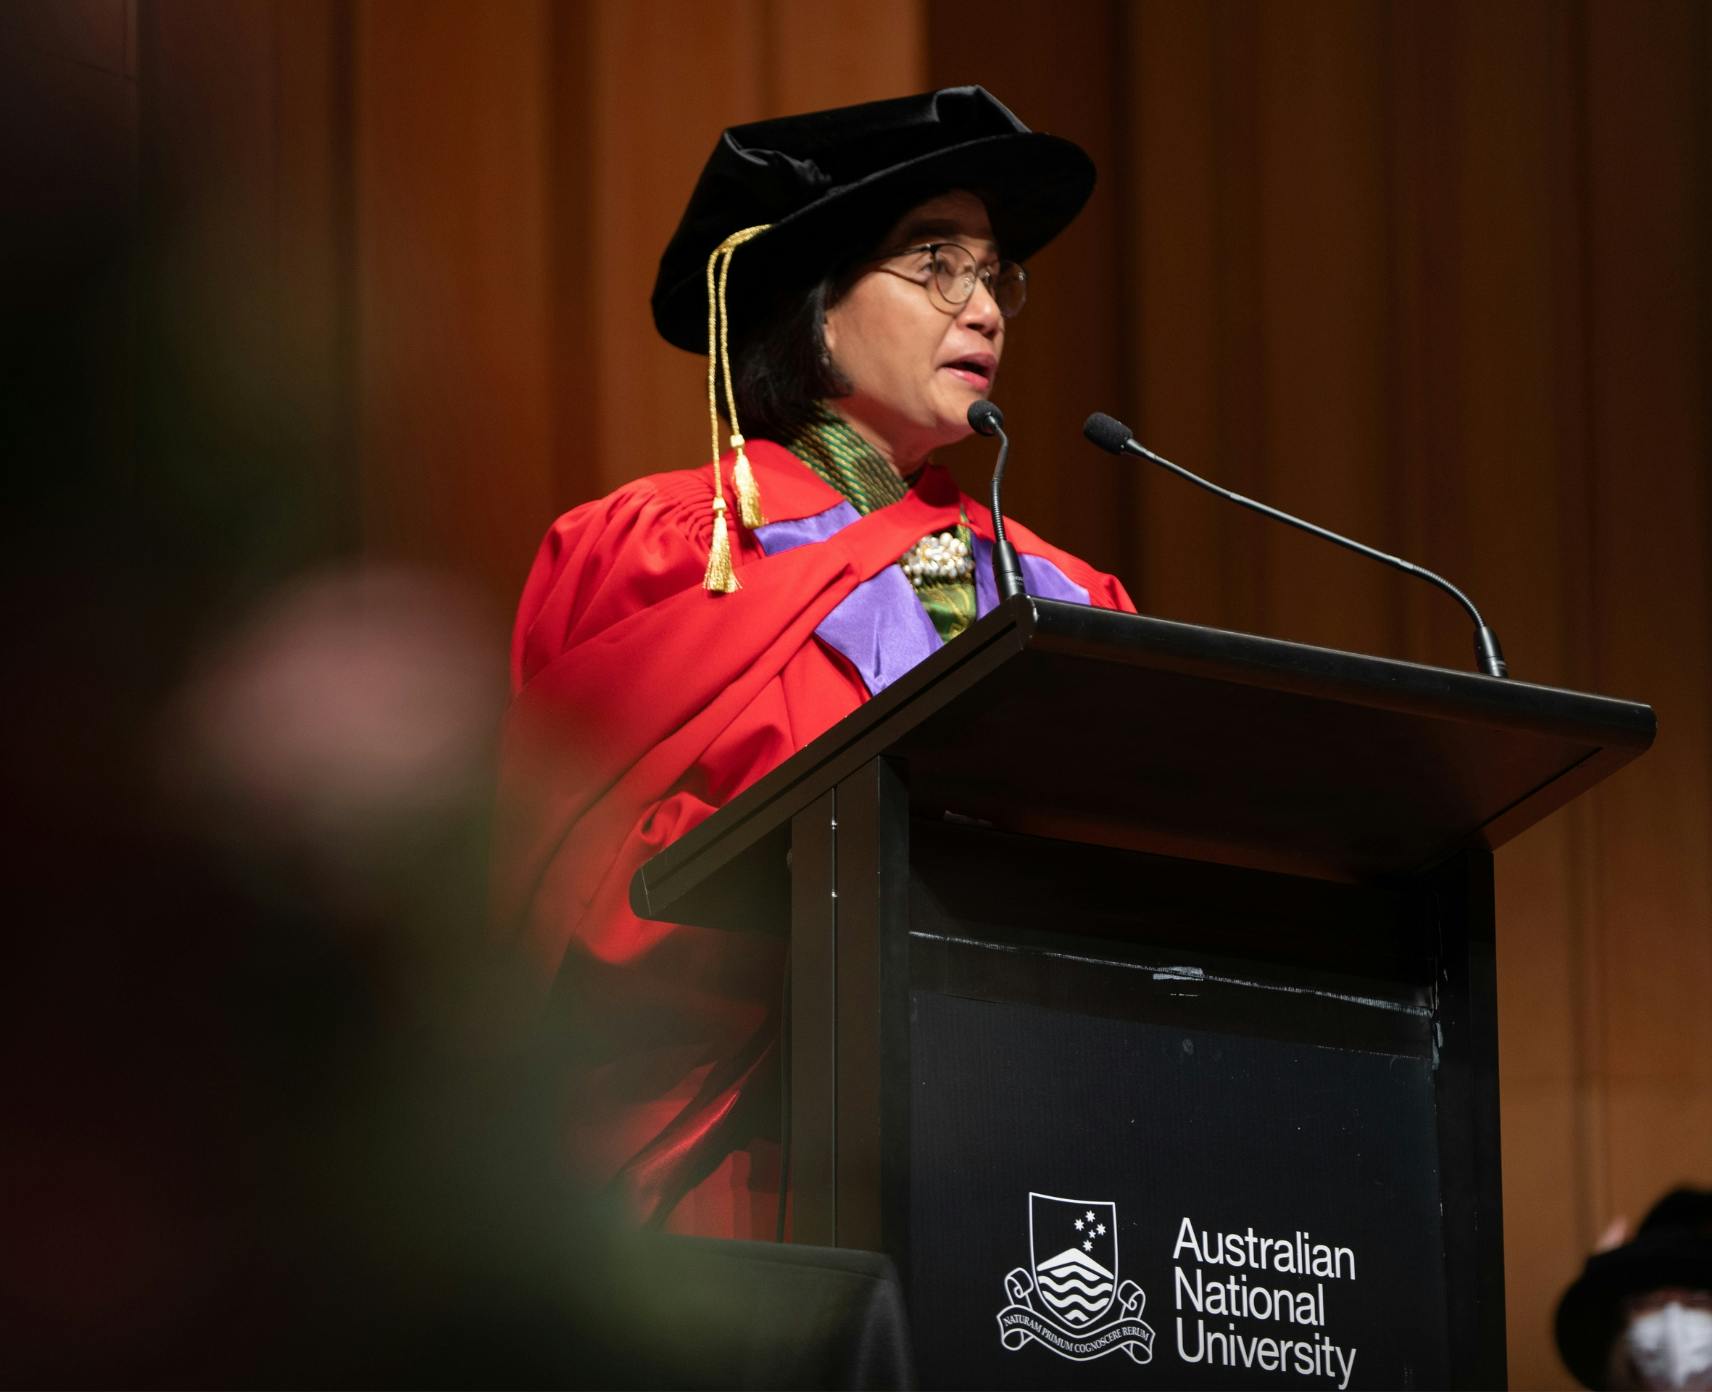 Sri Mulyani Indrawati dressed in academic regalia delivers a speech at Llewellyn Hall, ANU